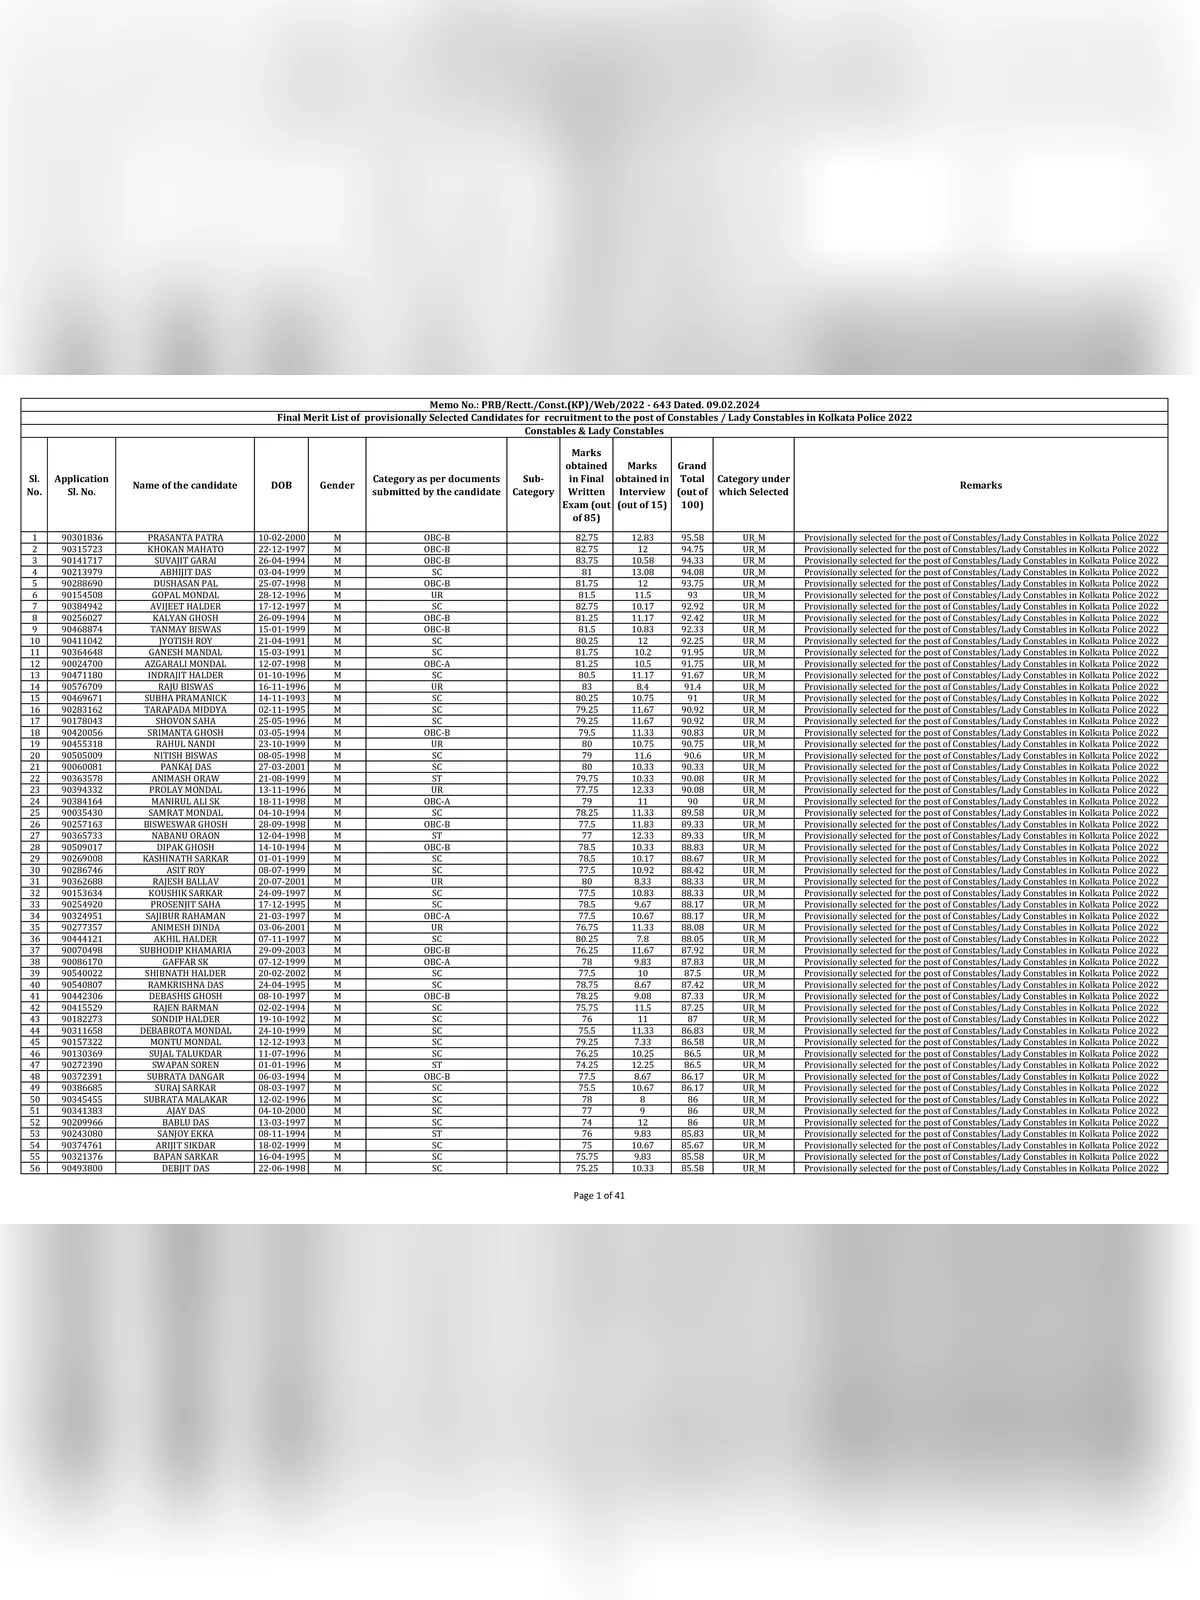 KP Constable Final Merit List 2024